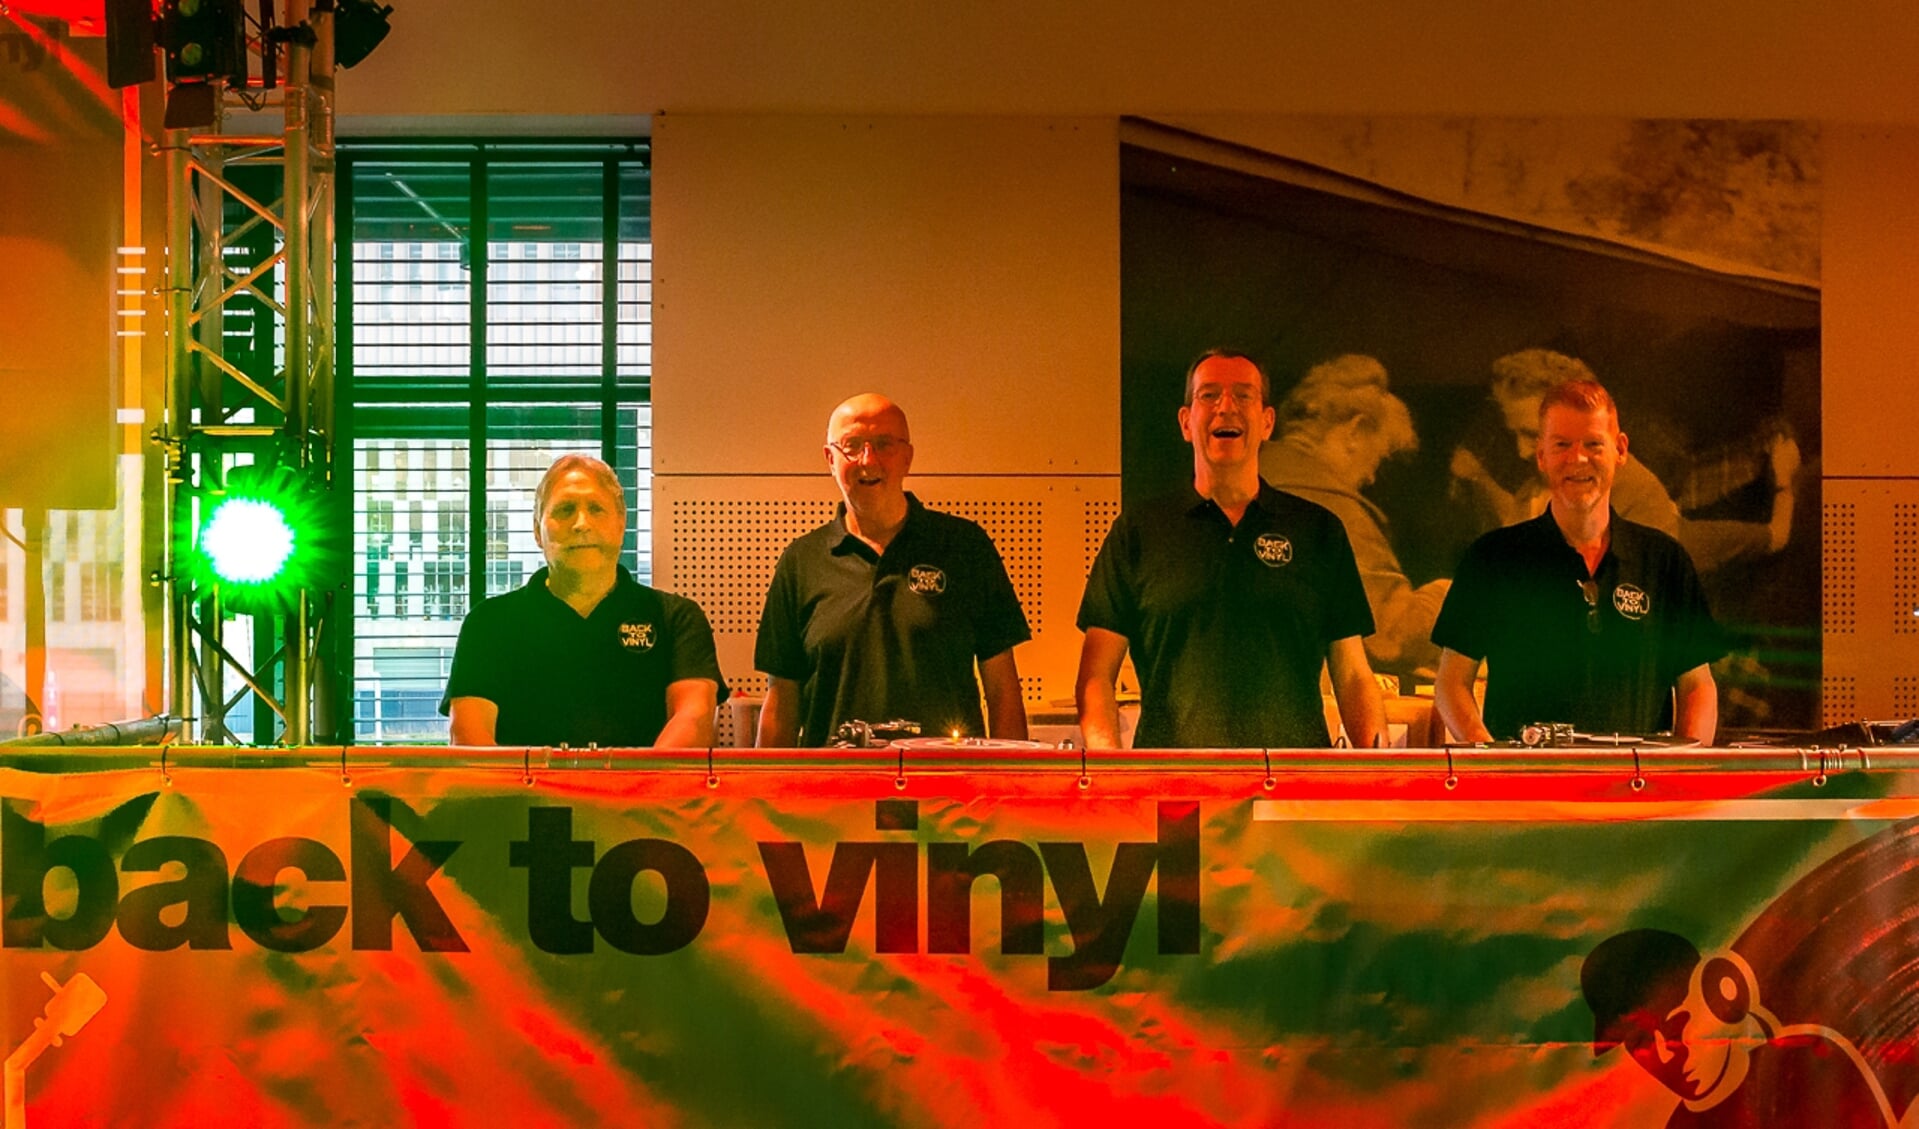 • Teamleden Back to Vinyl met vlnr: Ben Bochanen, Harry Kemp, Ariejan Boon en Lykele Bokhorst.